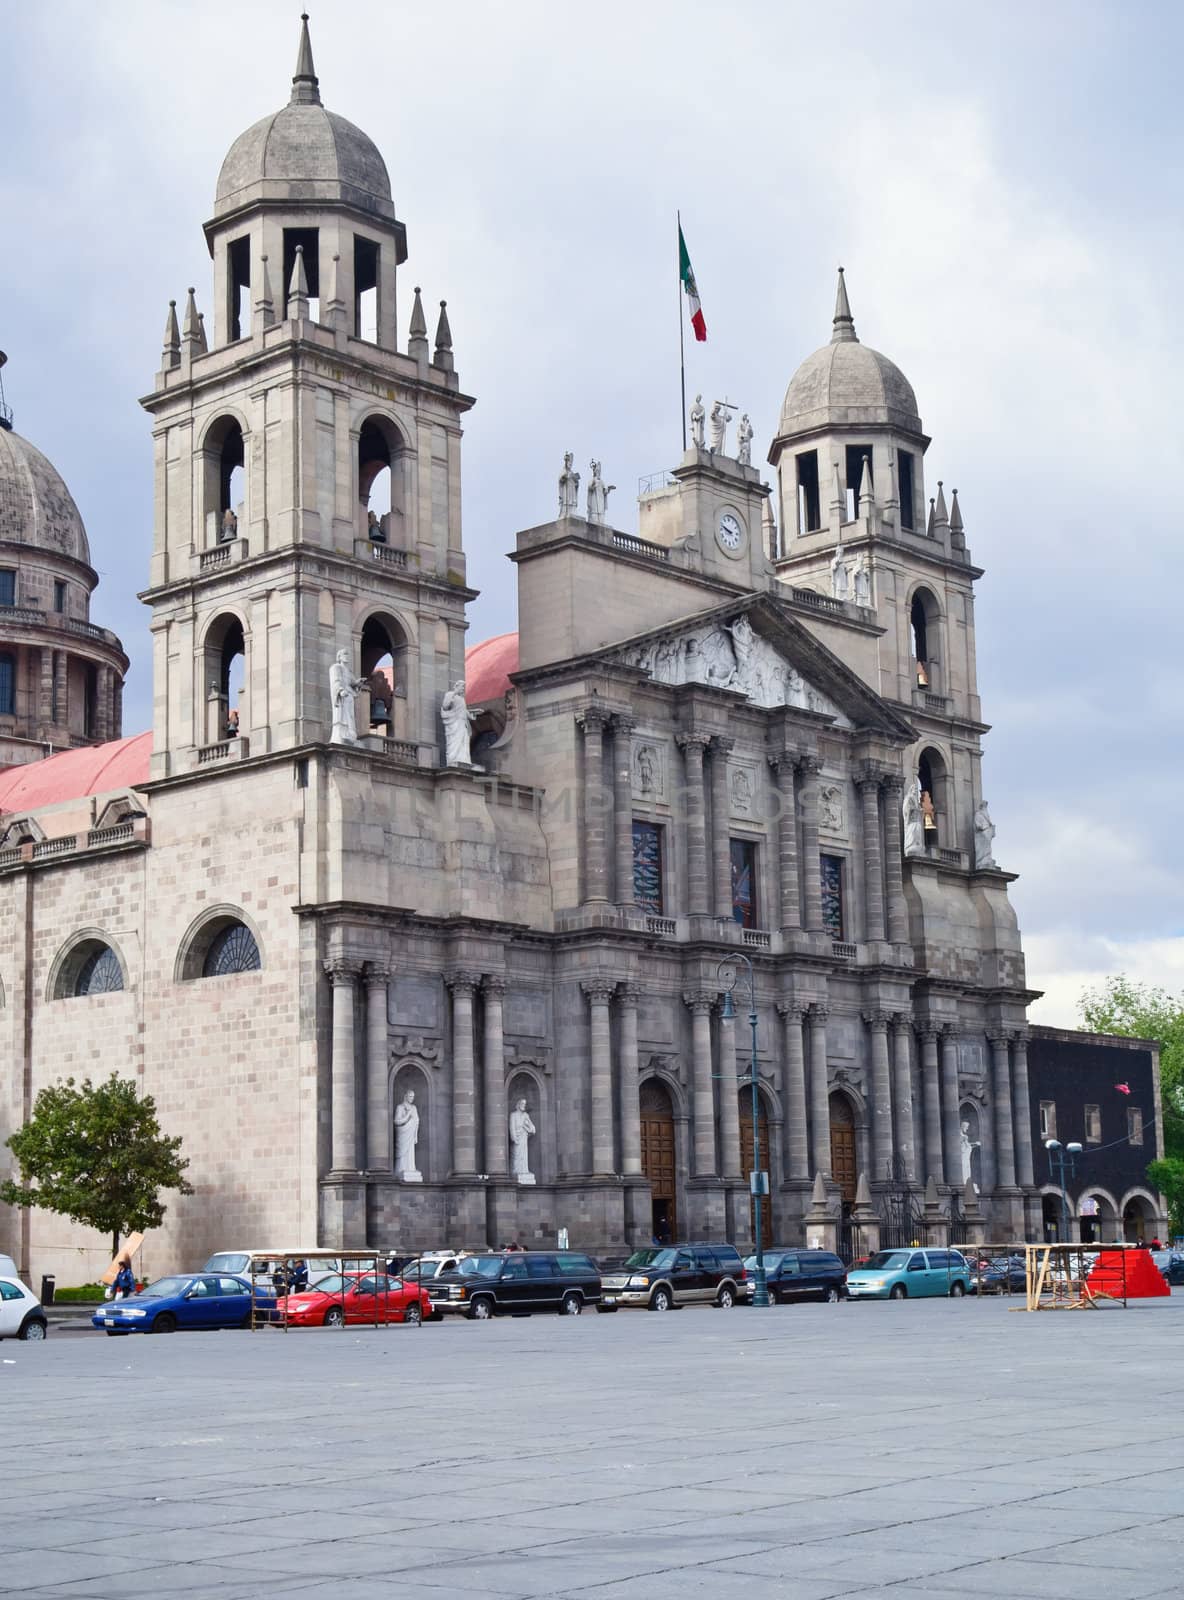  the facade of the twin tower Cathedral of Toluca de Lerdo, Mexico.

